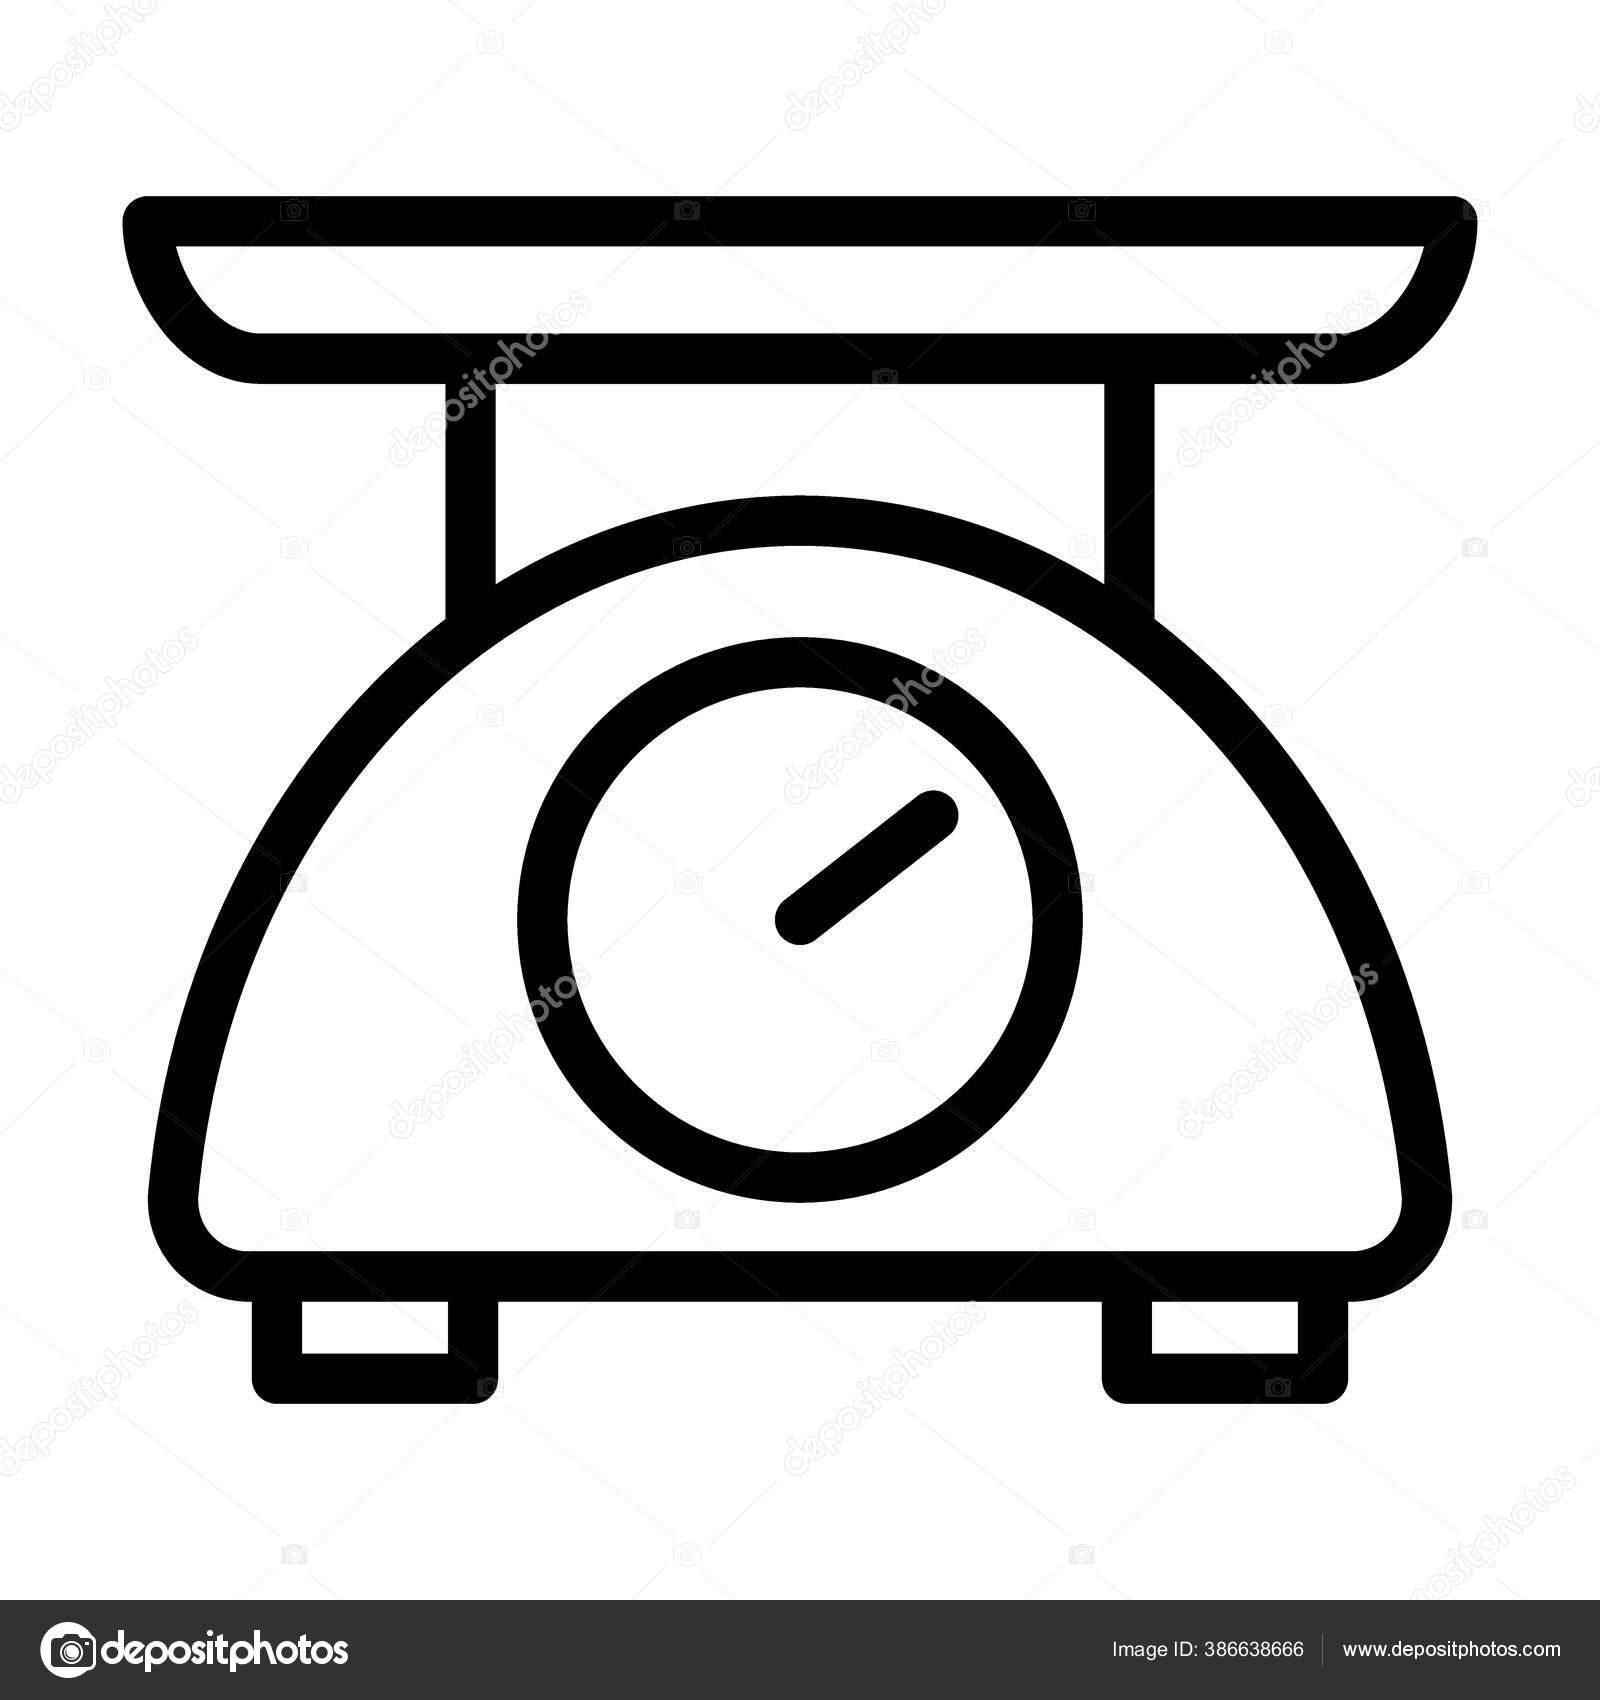 https://st4.depositphotos.com/1393072/38663/v/1600/depositphotos_386638666-stock-illustration-kitchen-scale-line-icon-weight.jpg